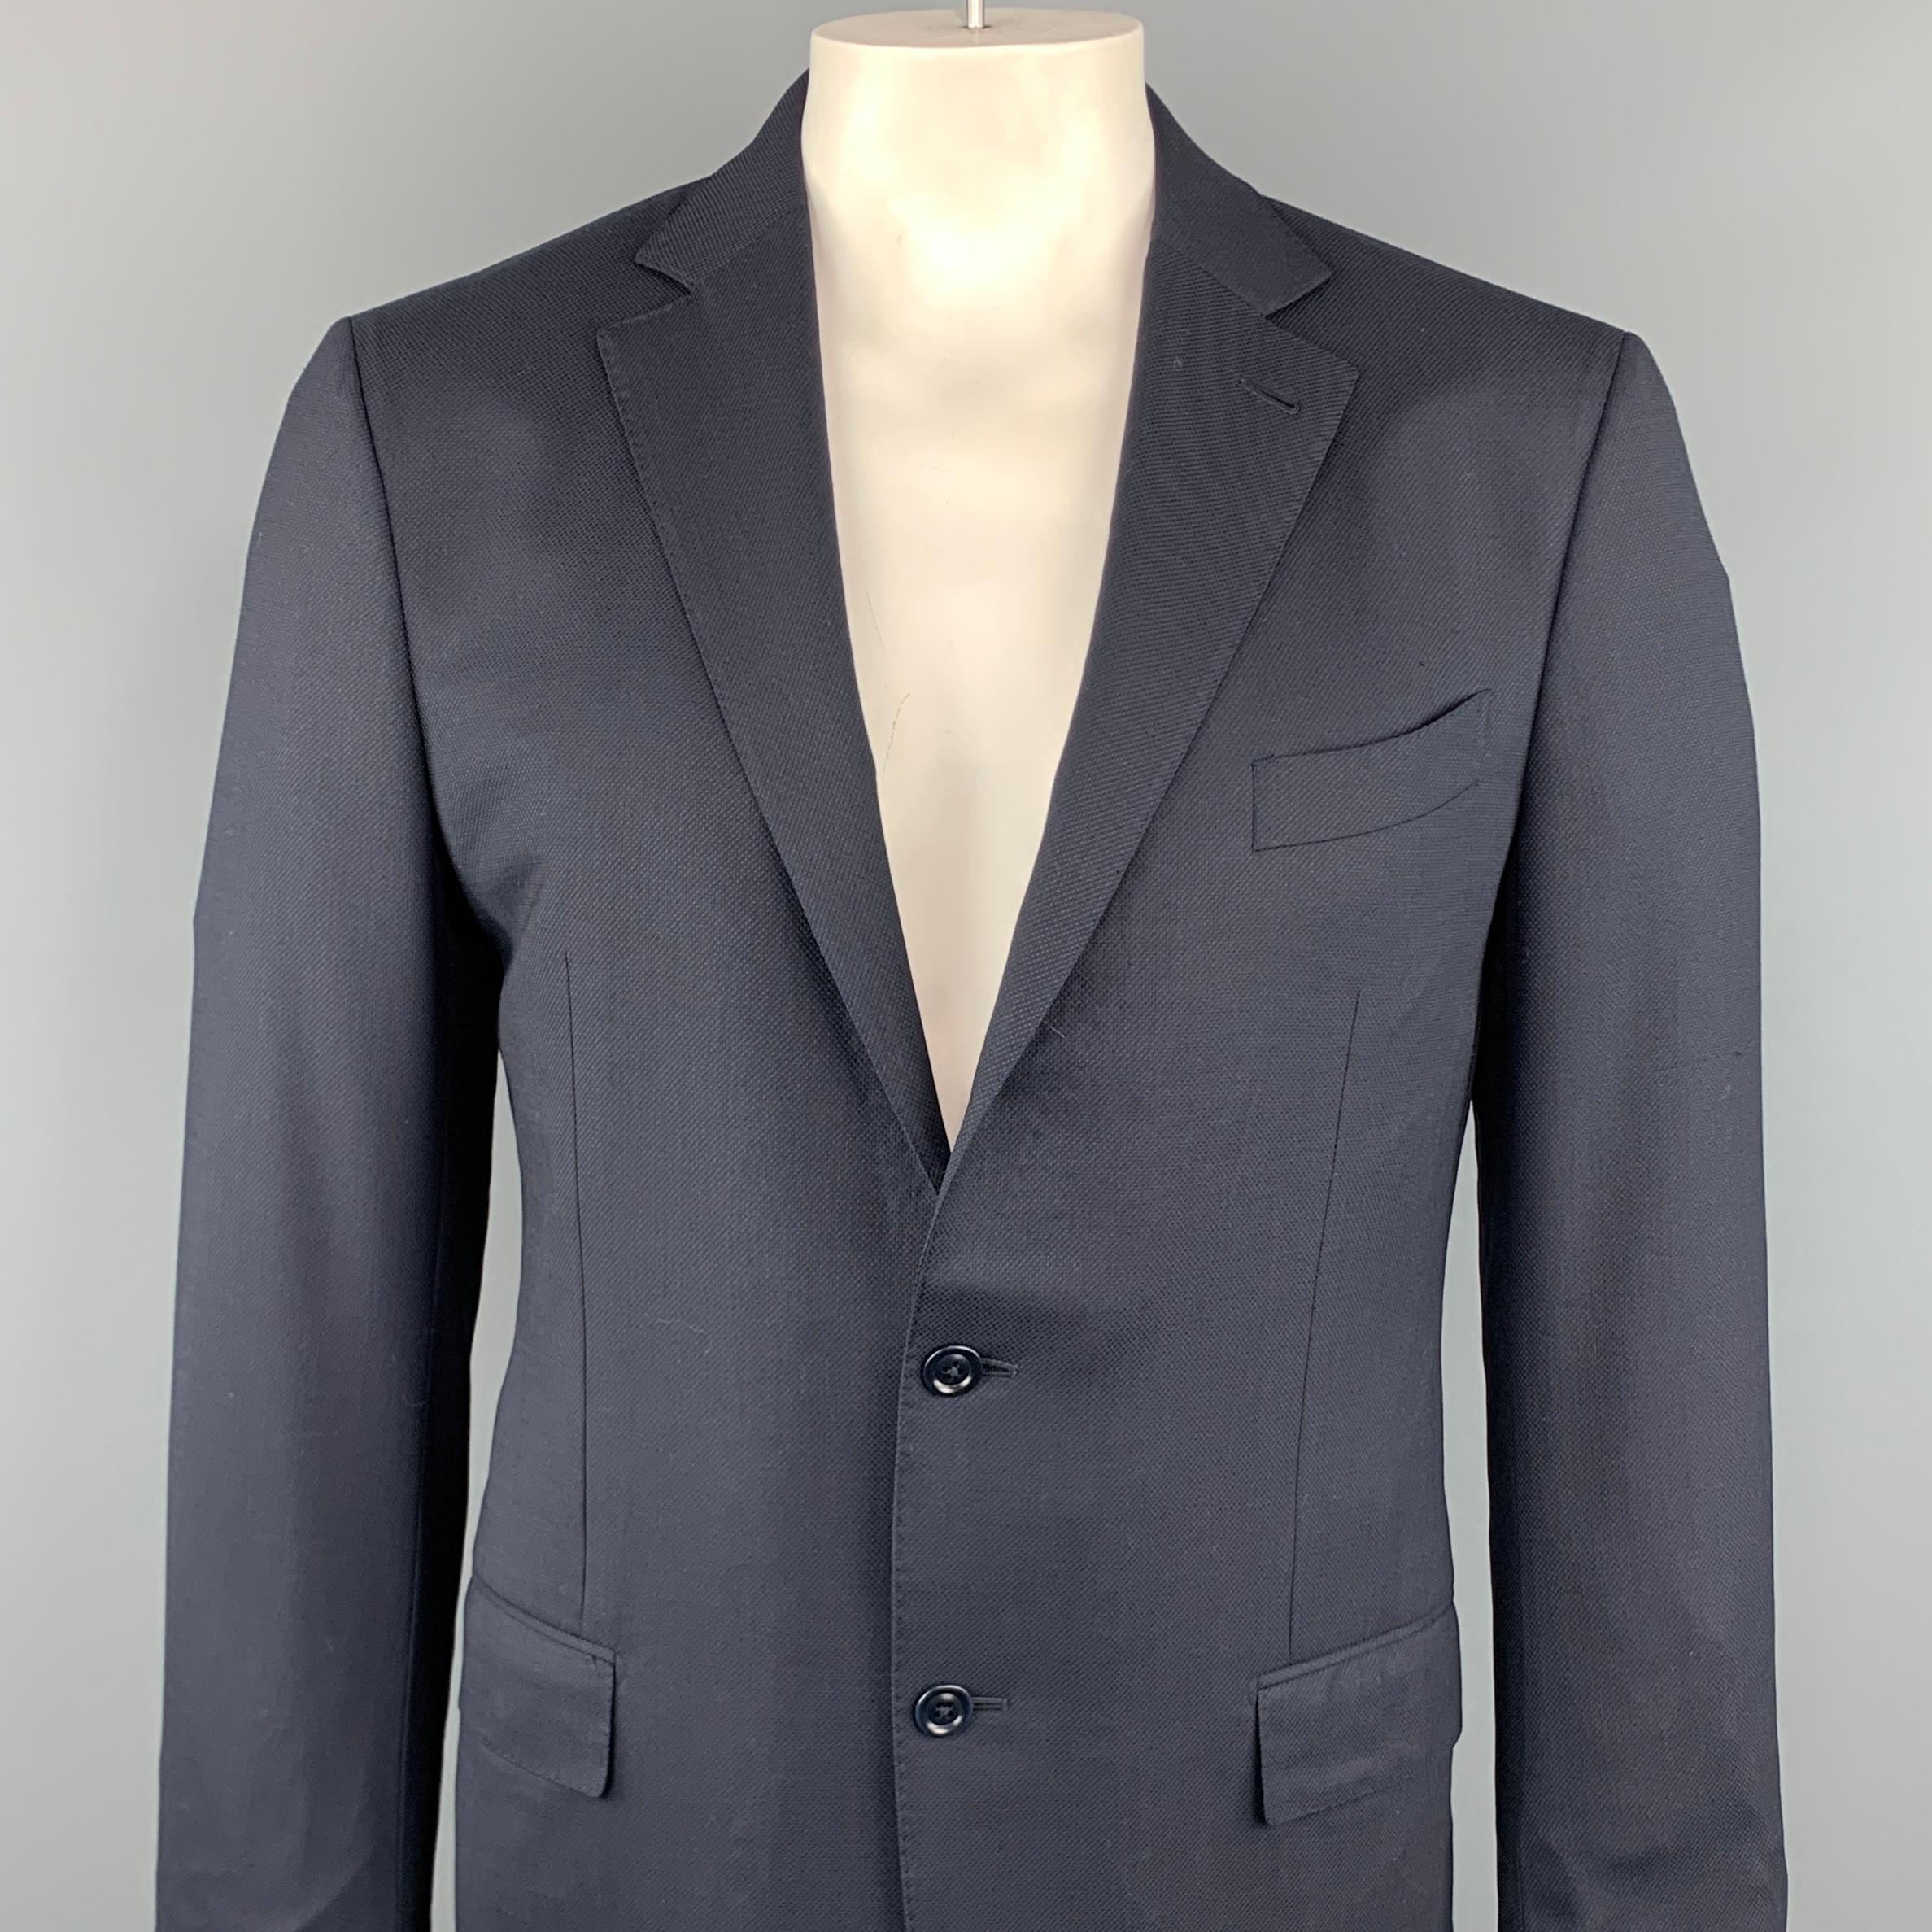 ERMENEGILDO ZEGNA sport coat comes in a navy wool featuring a 